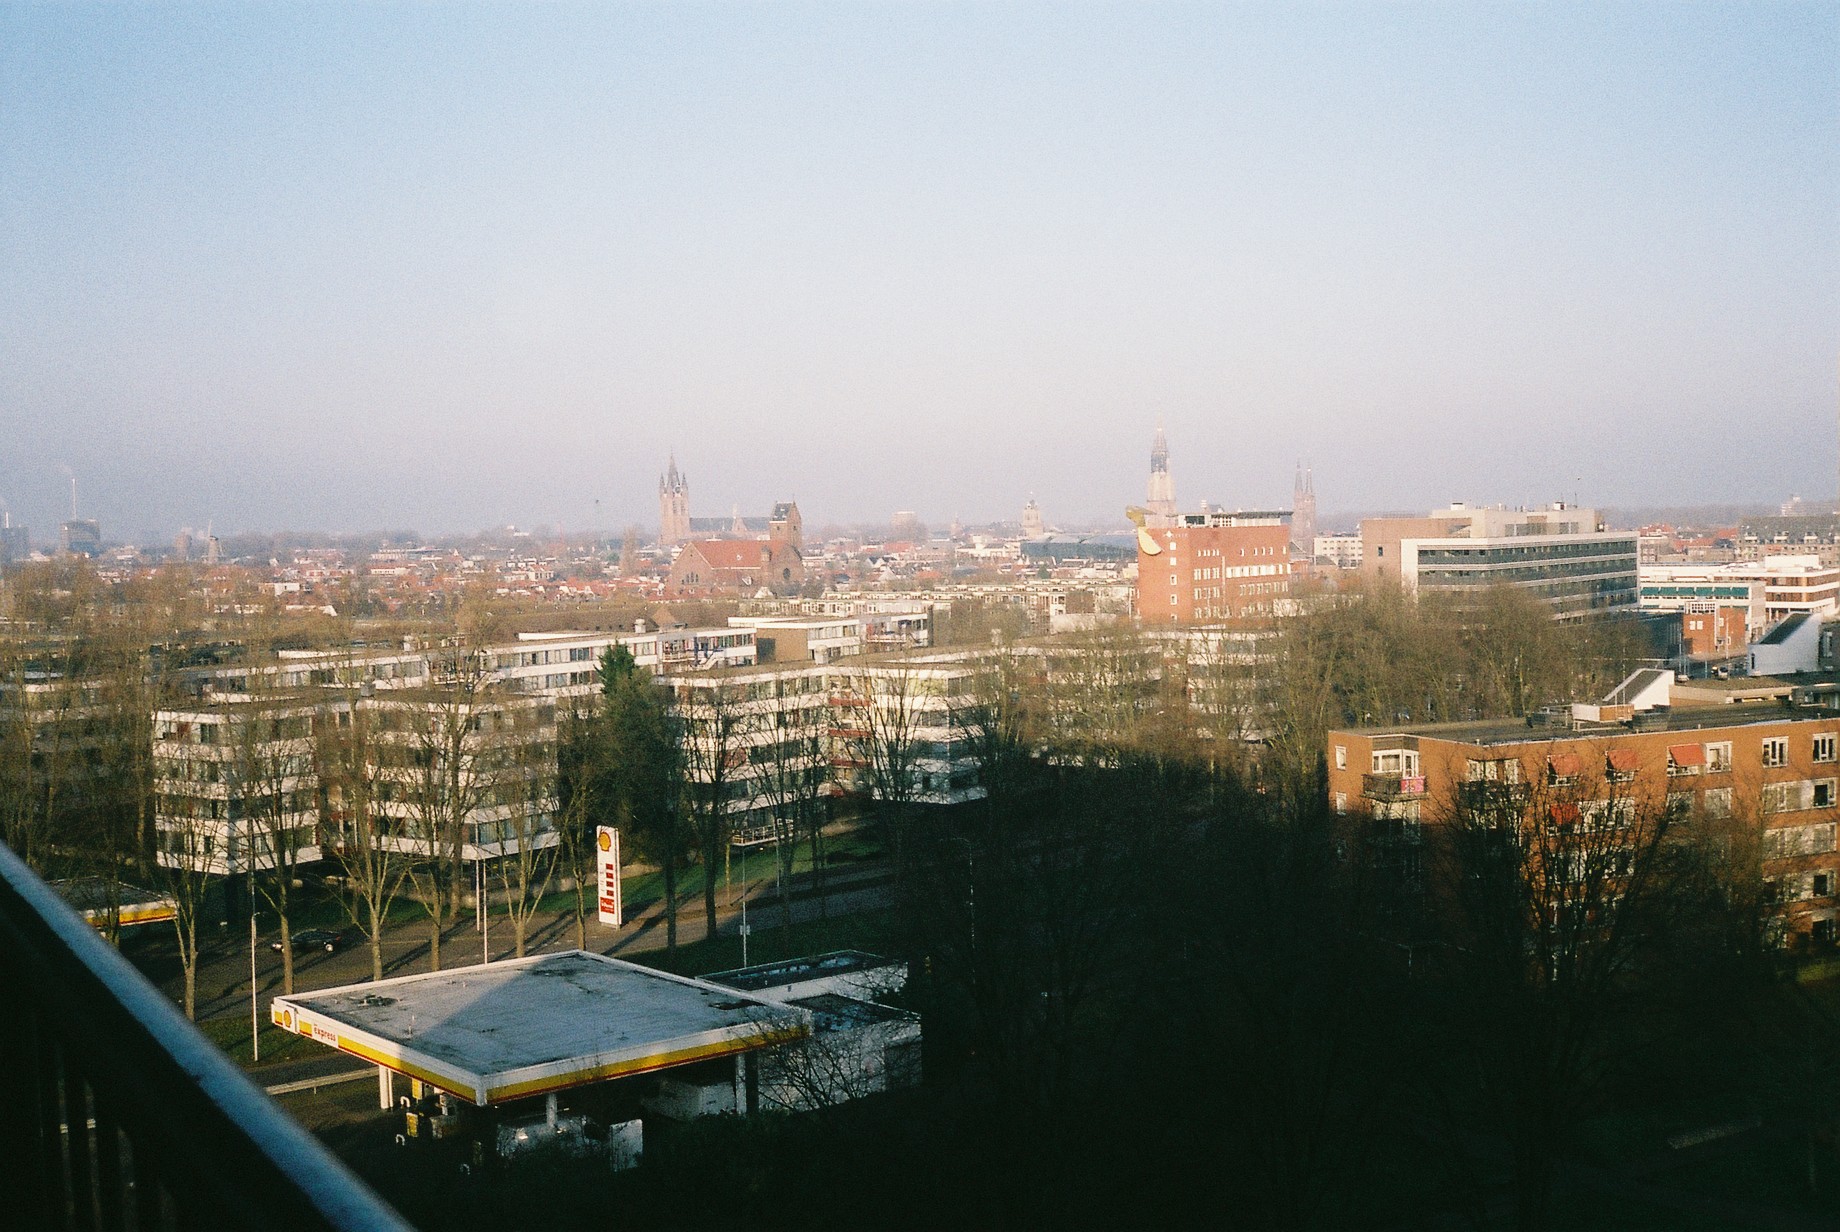 Delft uitzicht, analoog